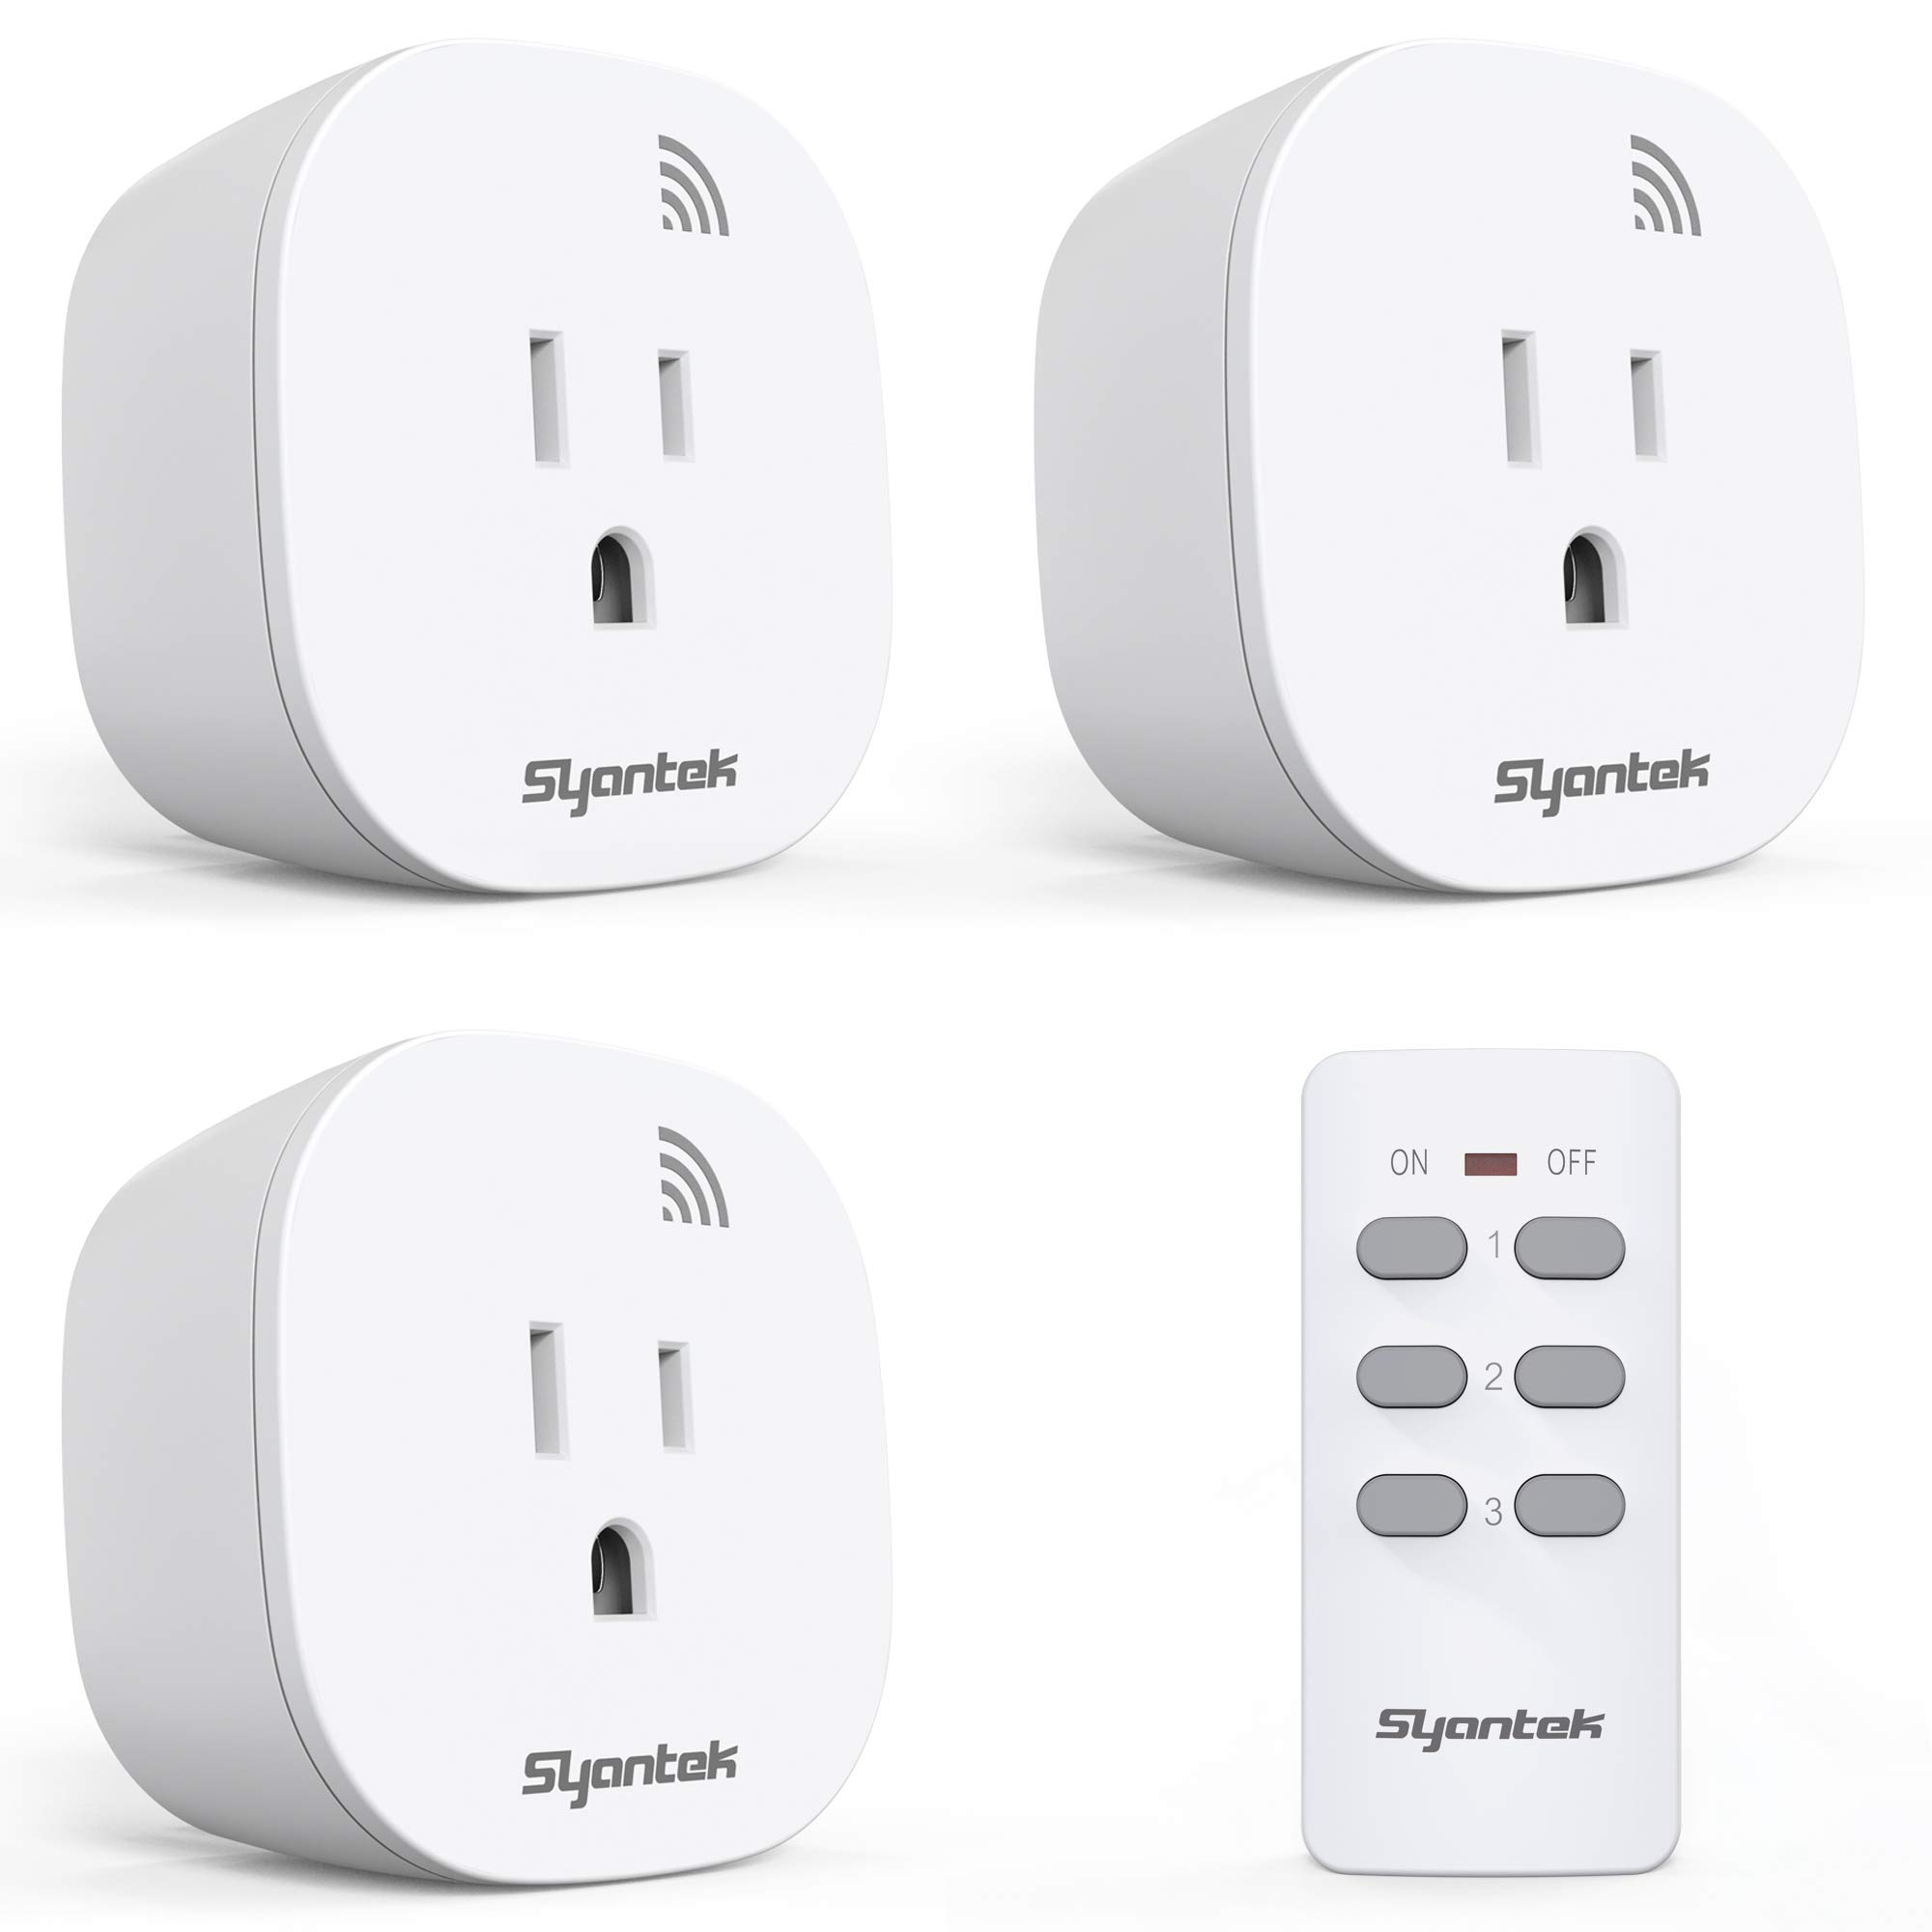 syantek Syantek Remote control Outlet Wireless Light Switch for